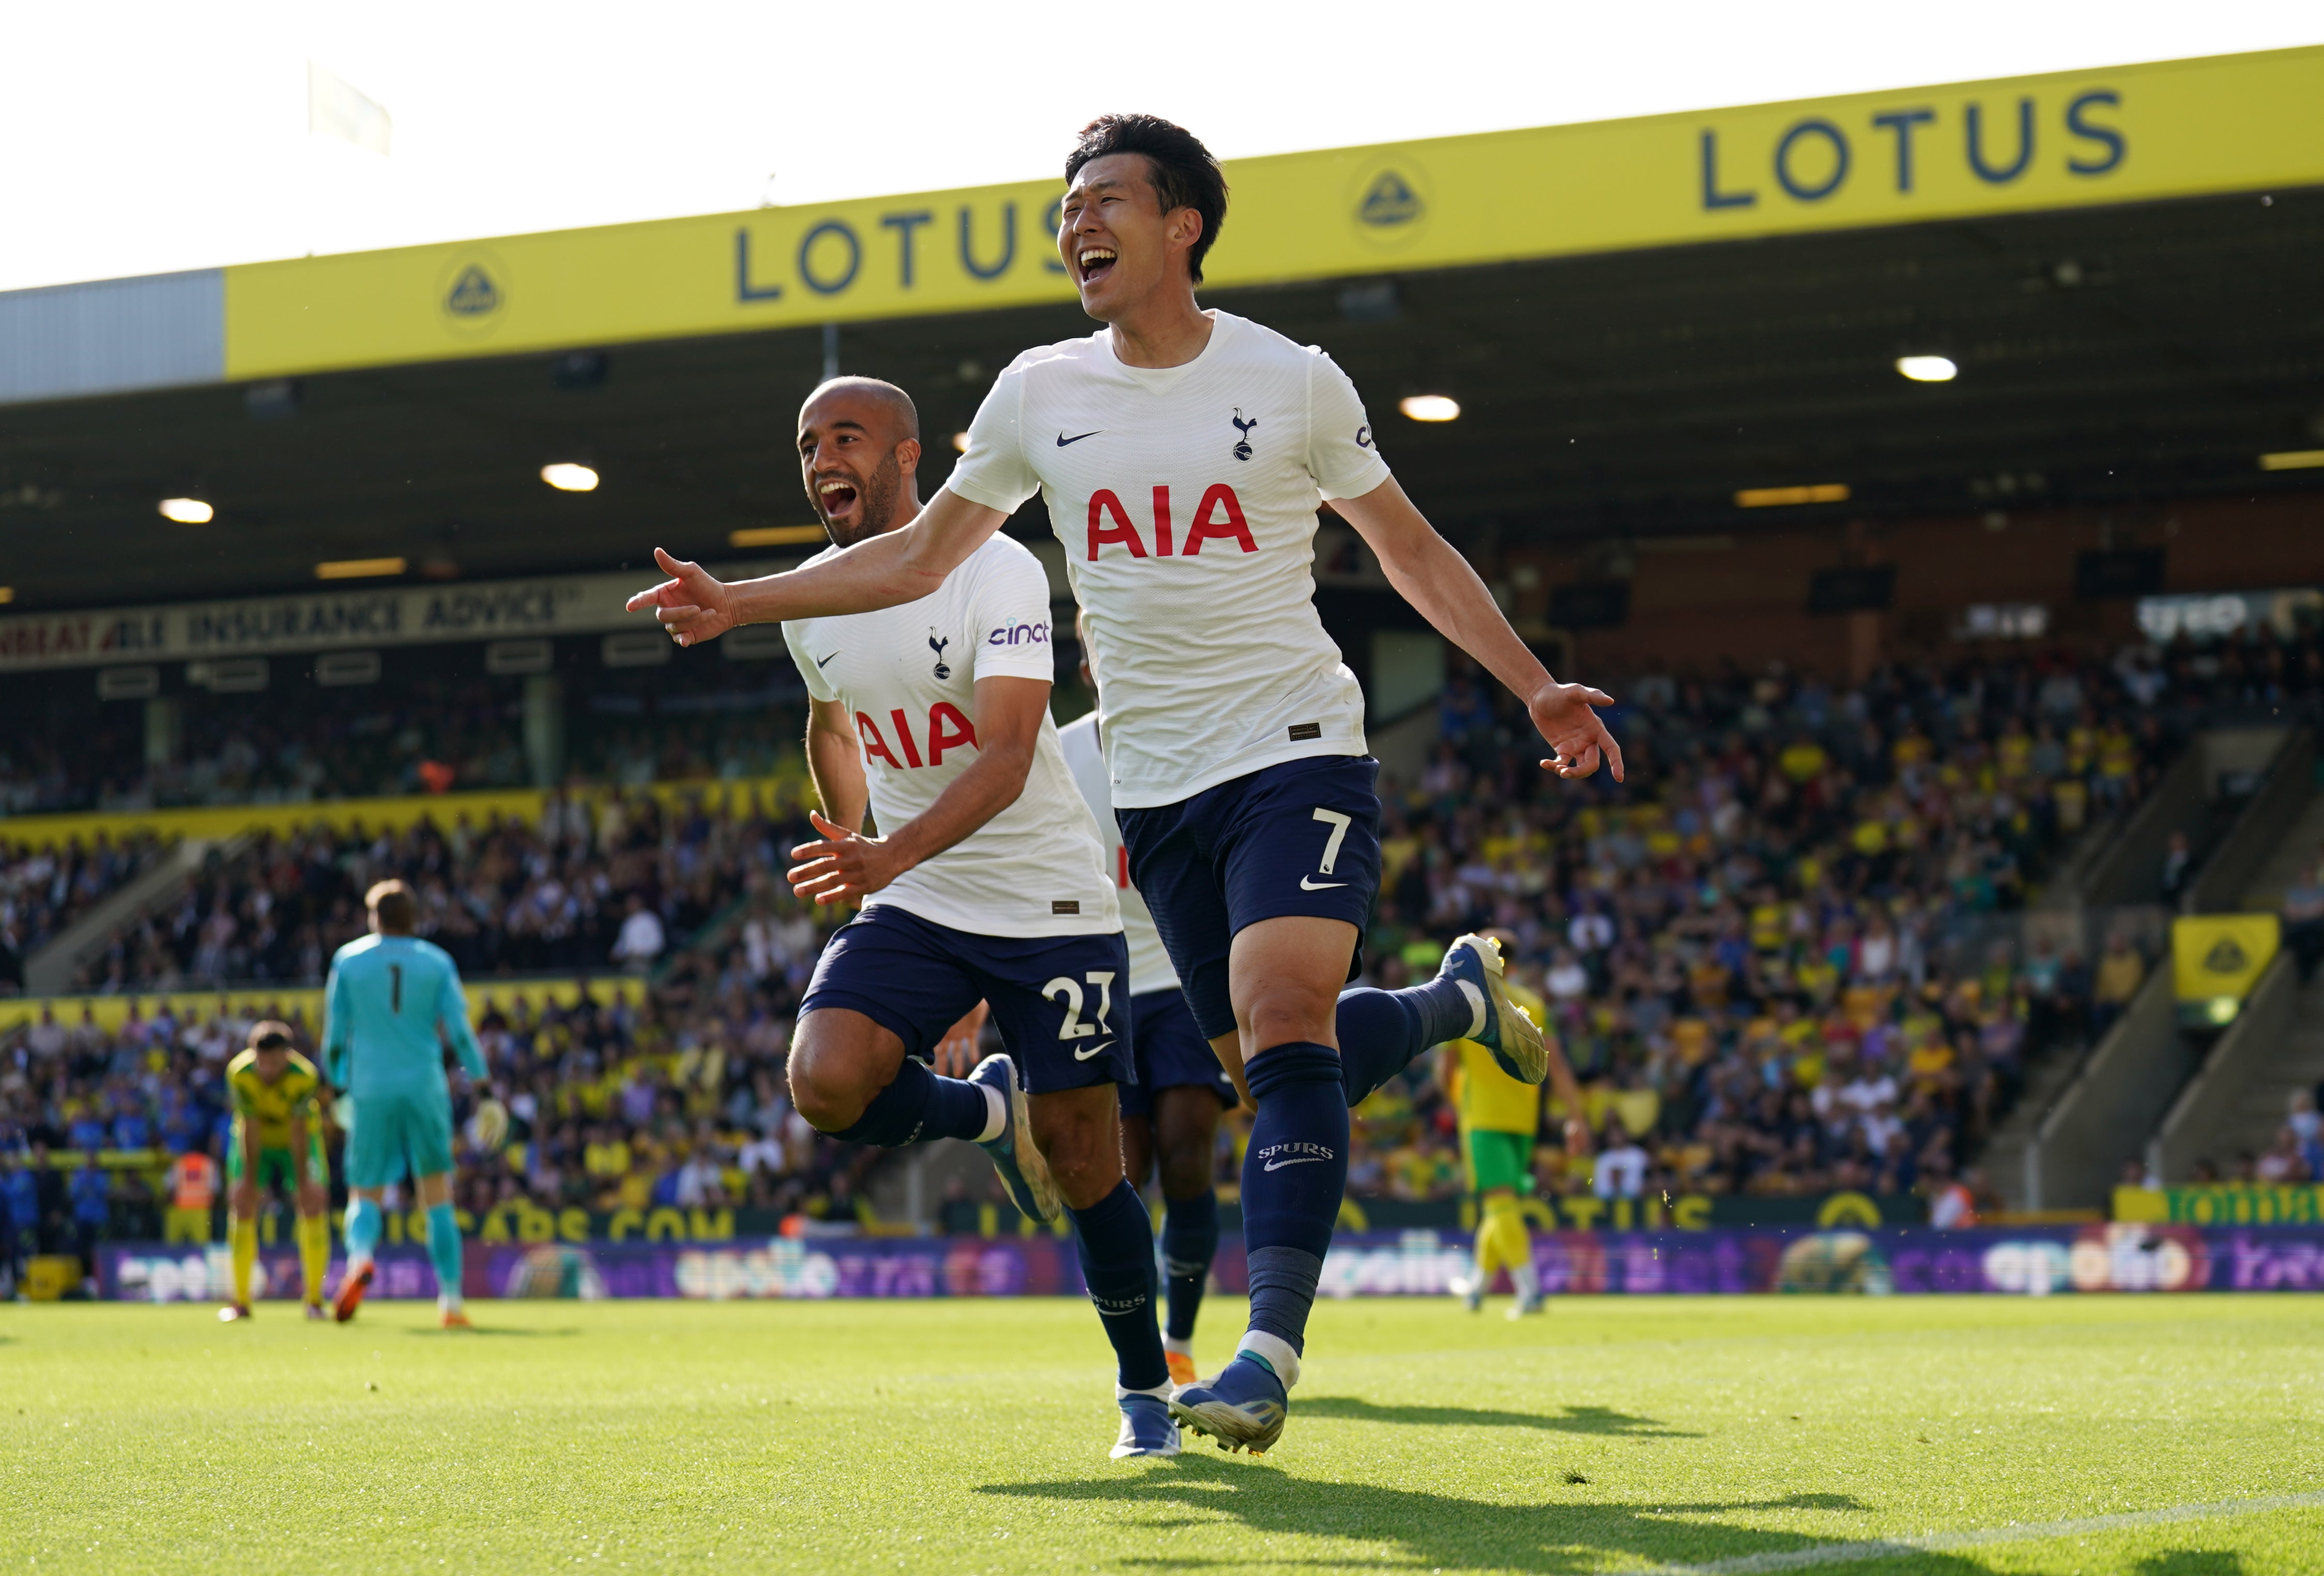 Norwich vs Tottenham result: Final goals, highlights match report | The Independent